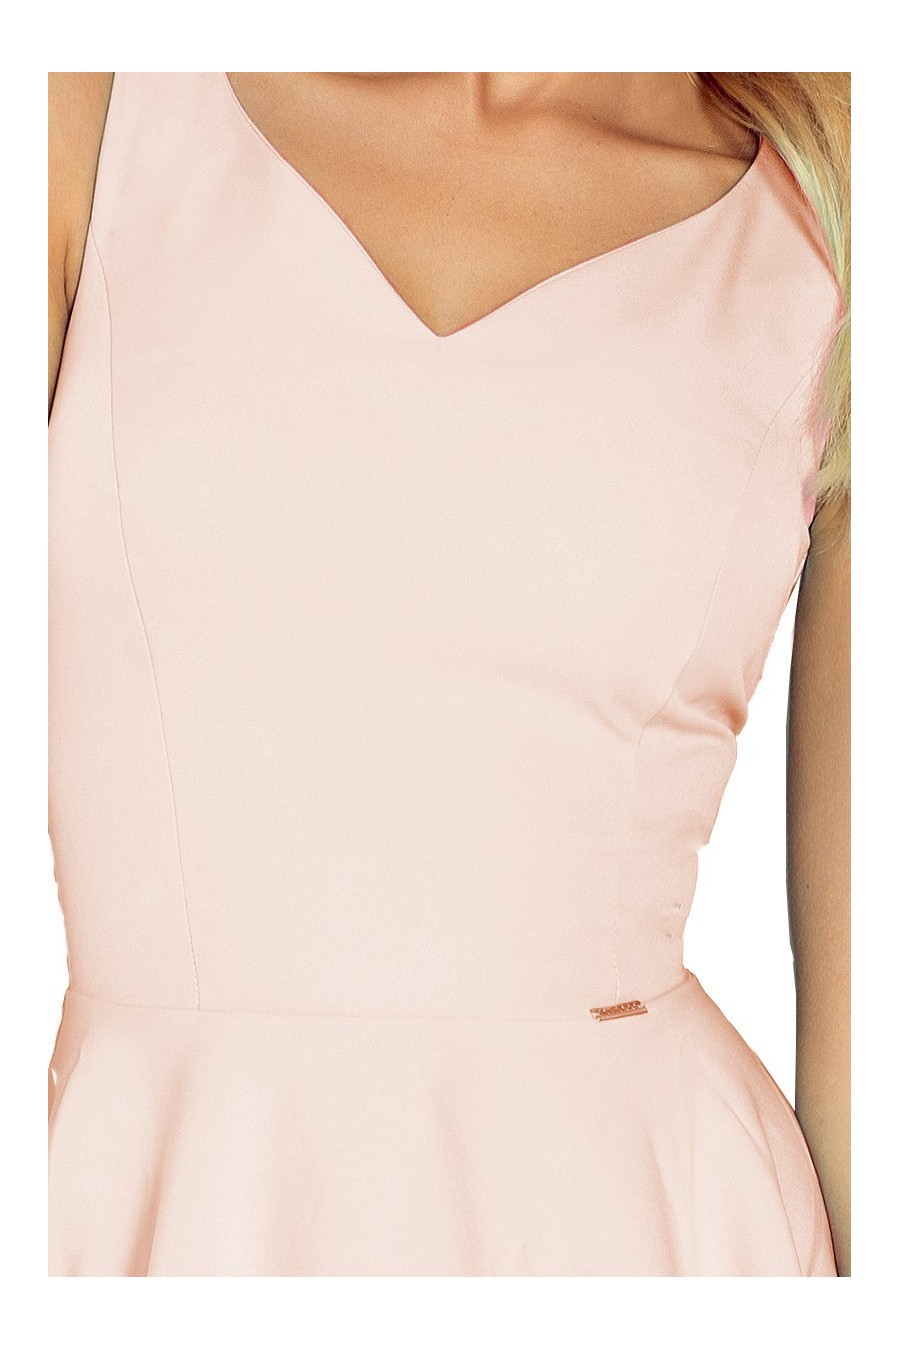 Dress circle - heart-shaped neckline - svetle ruzove 114-8